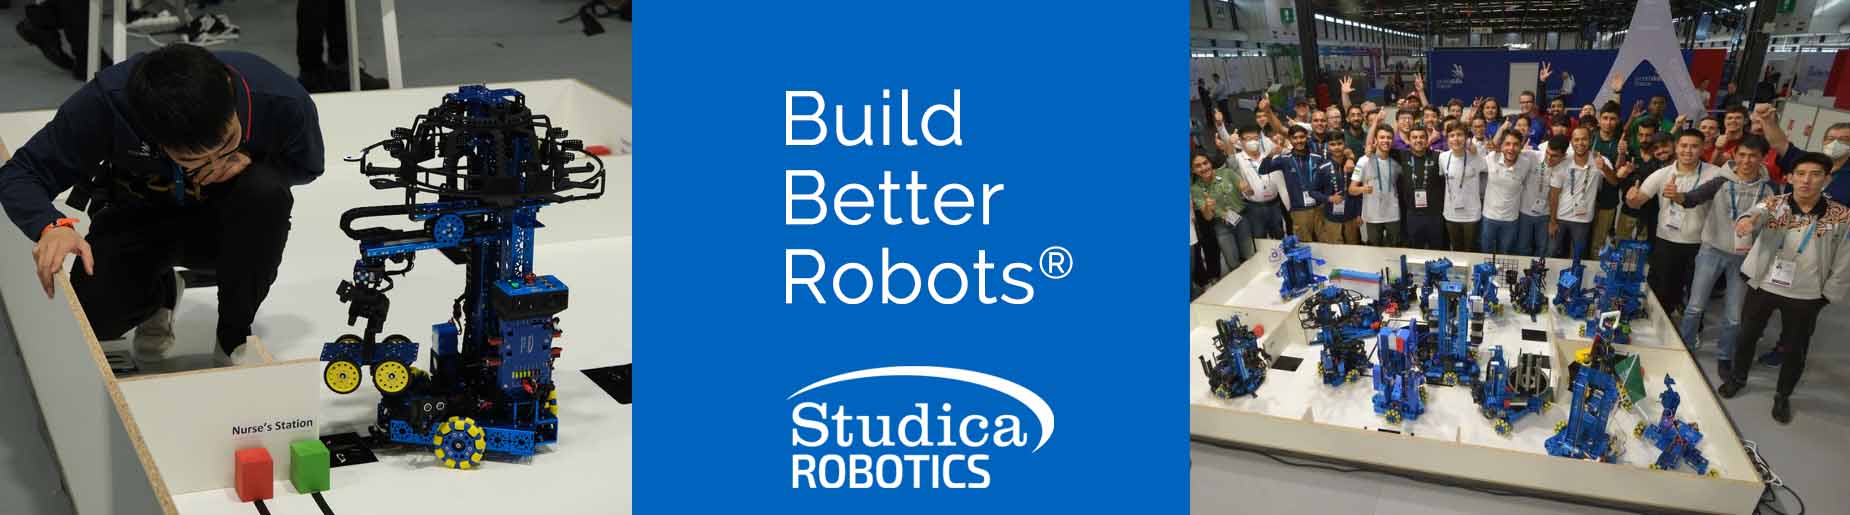 Studica Robotics Building Platform - Build Better Robots